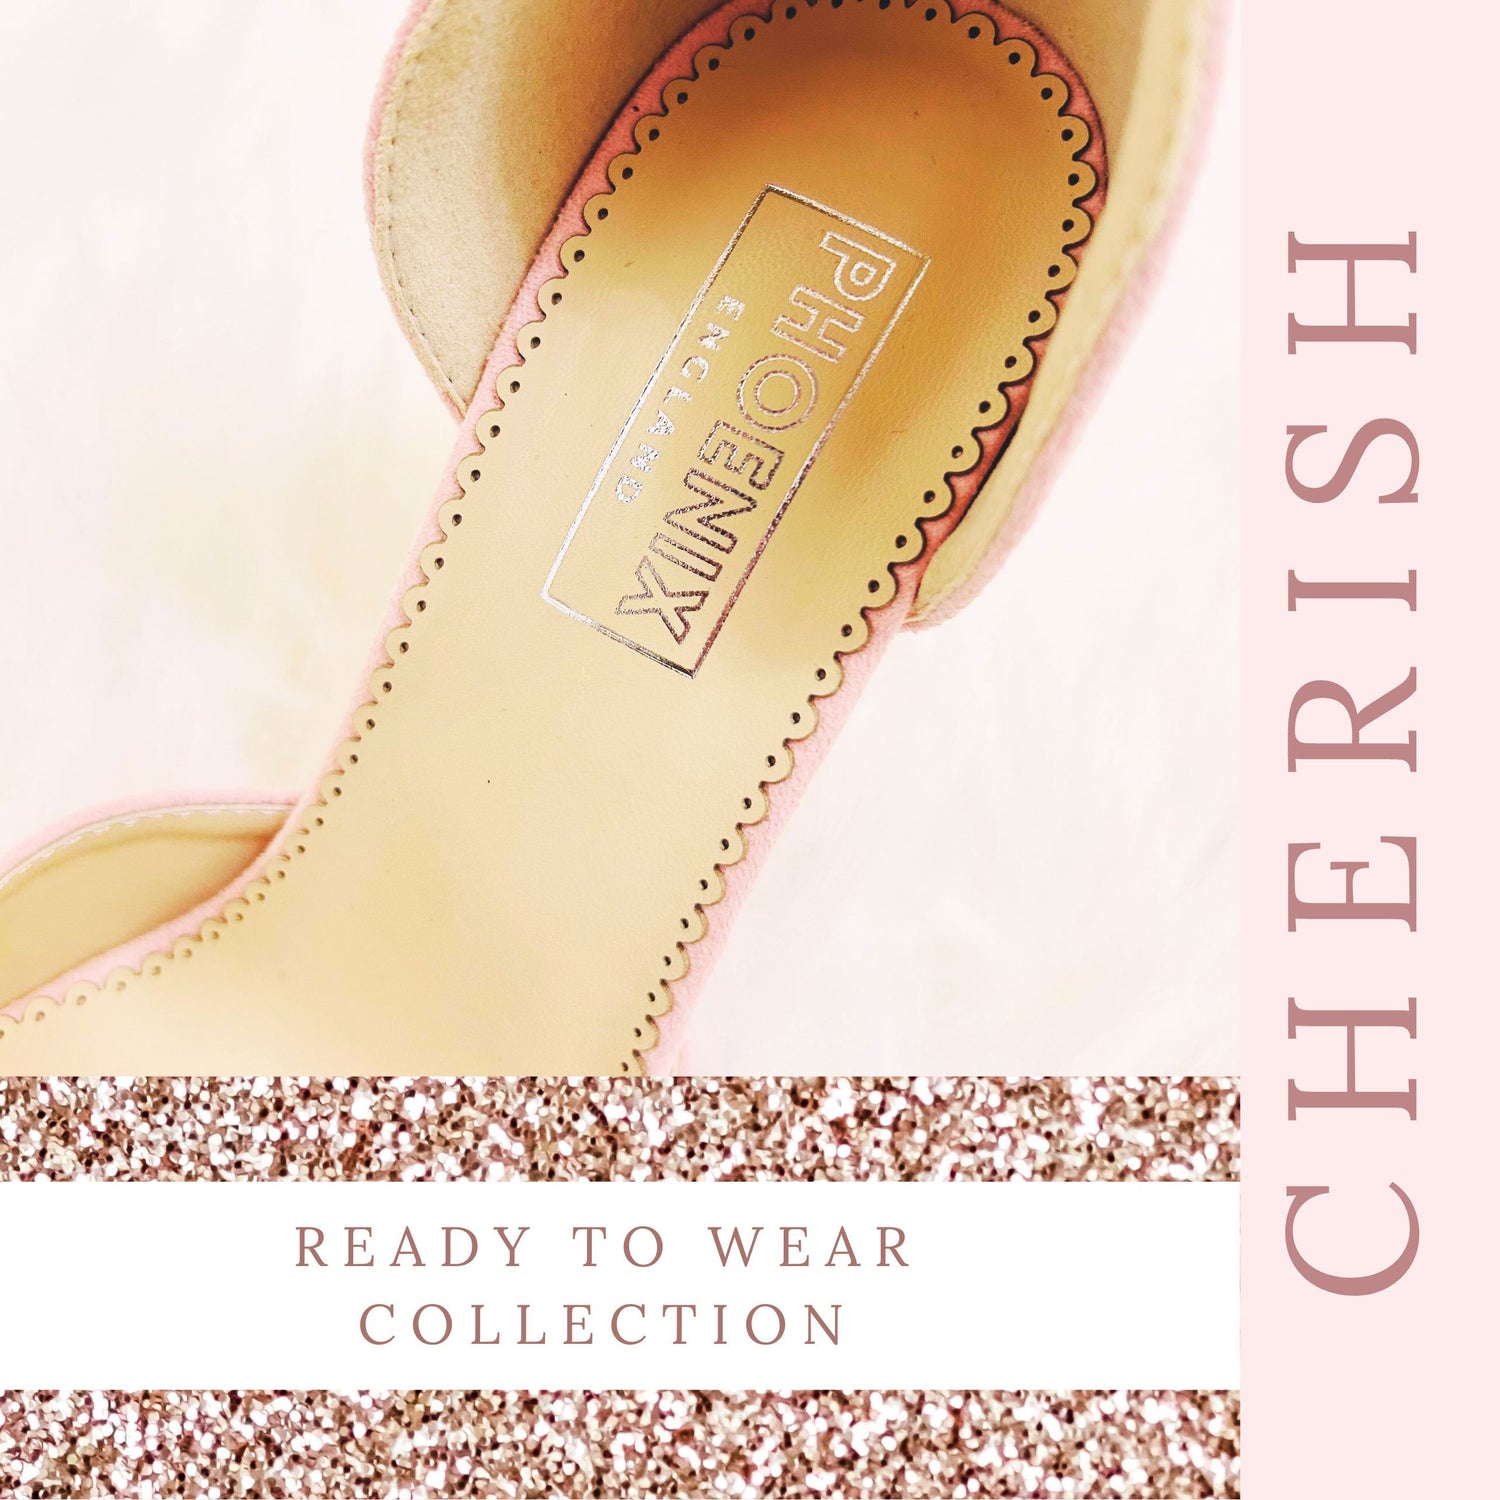 blush-sandals-for-a-wedding